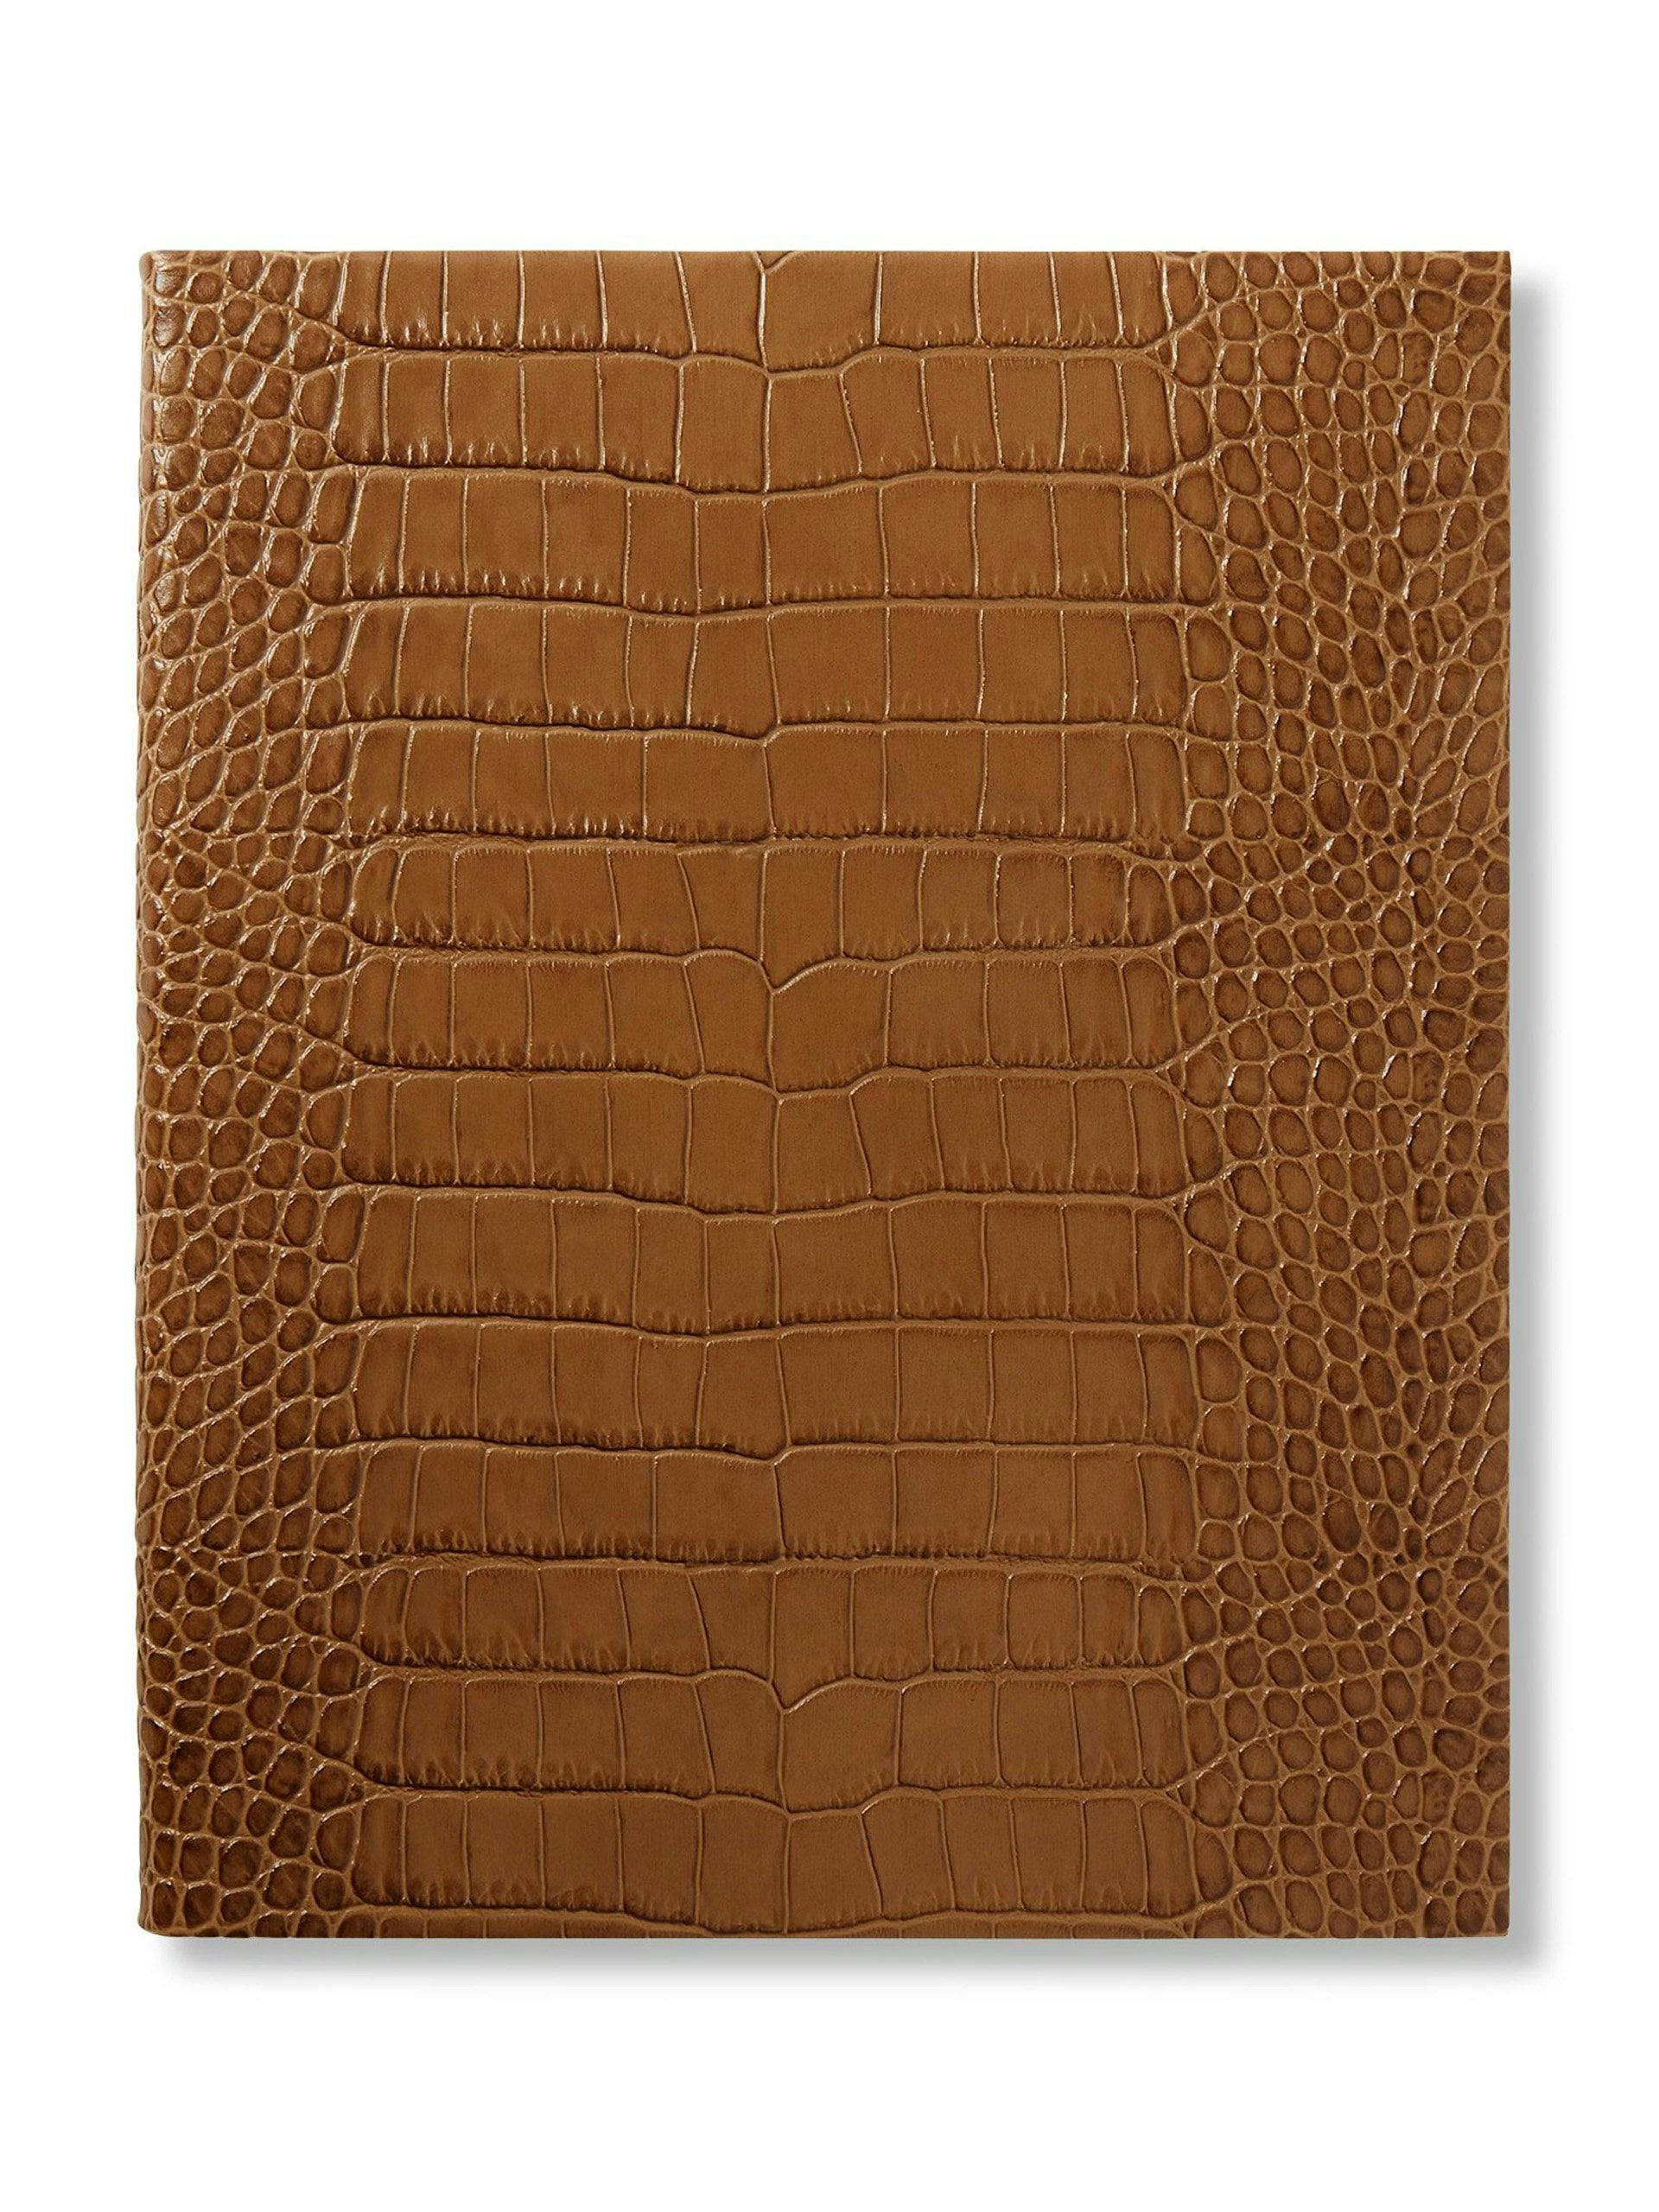 Personalised crocodile leather notebook